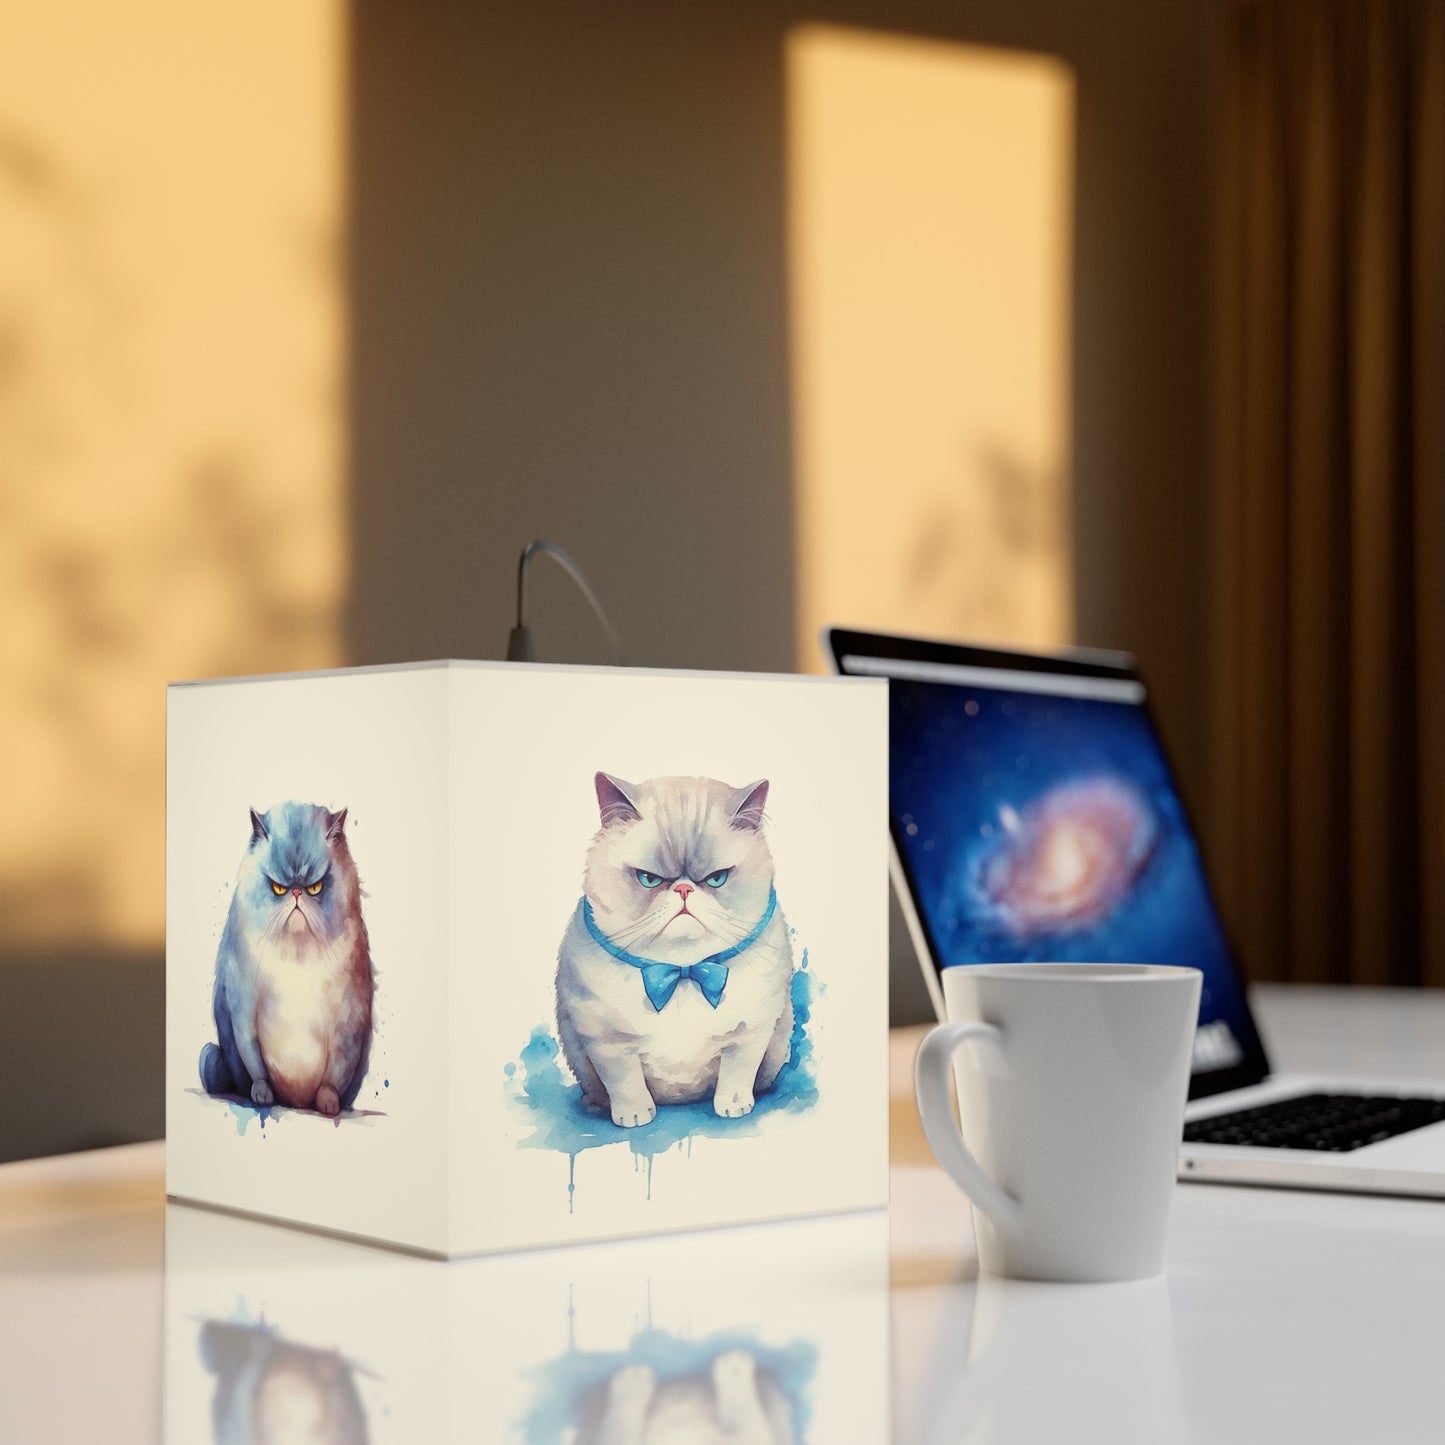 CATS Light Cube Lamp